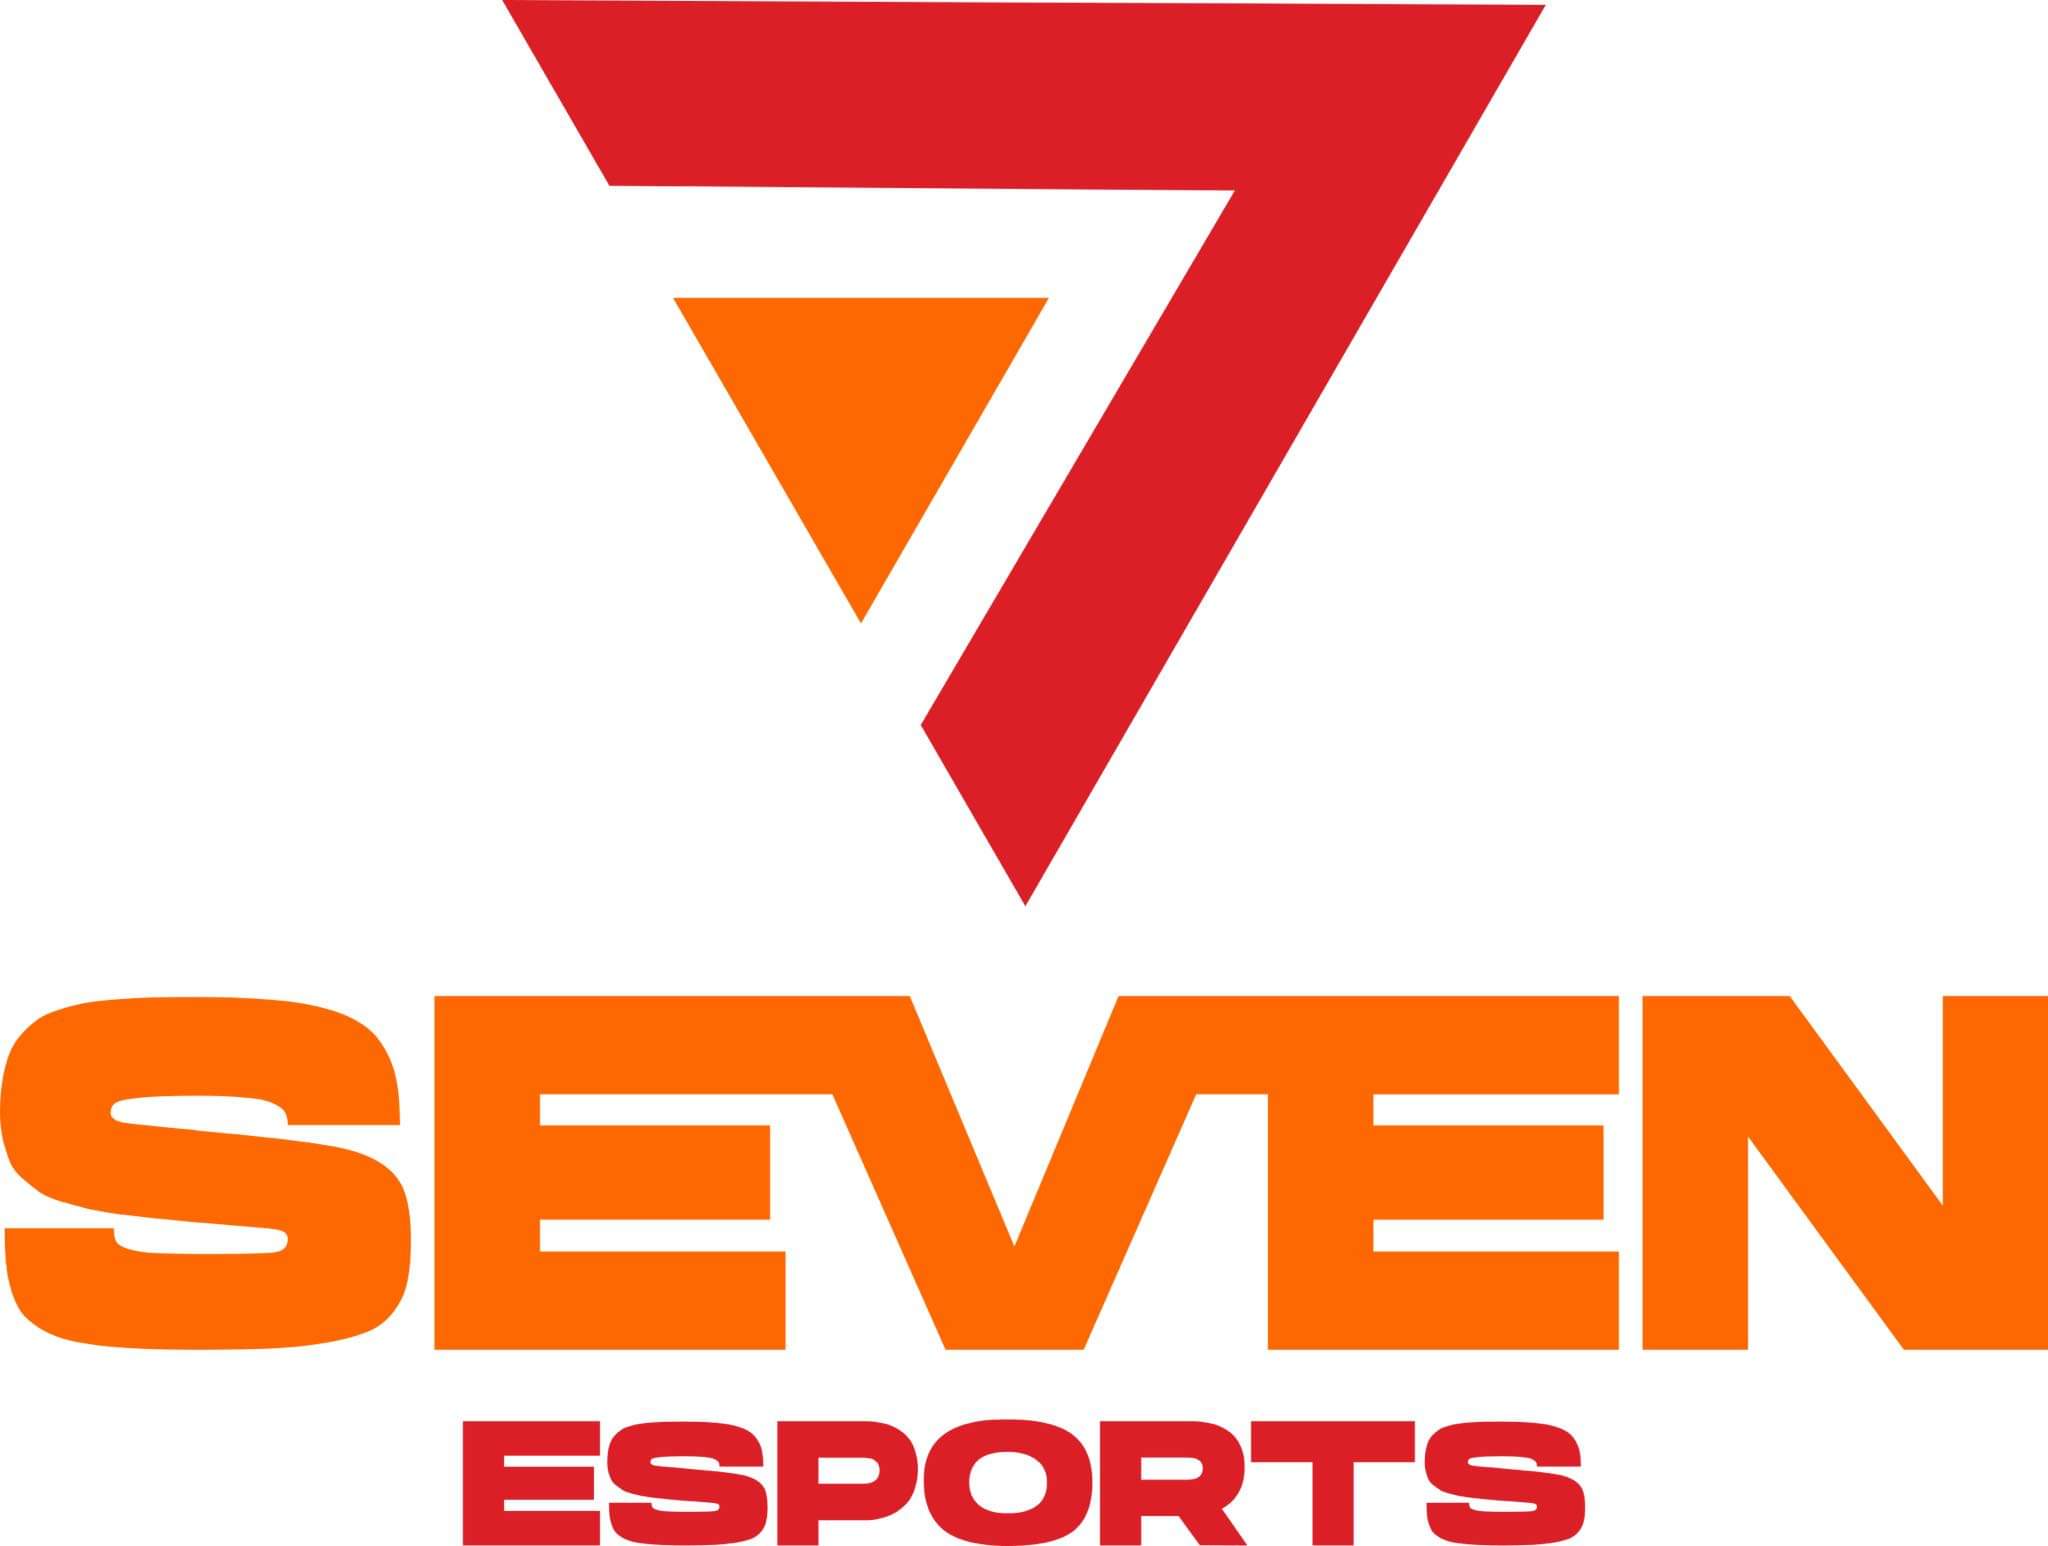 7Sevenesports